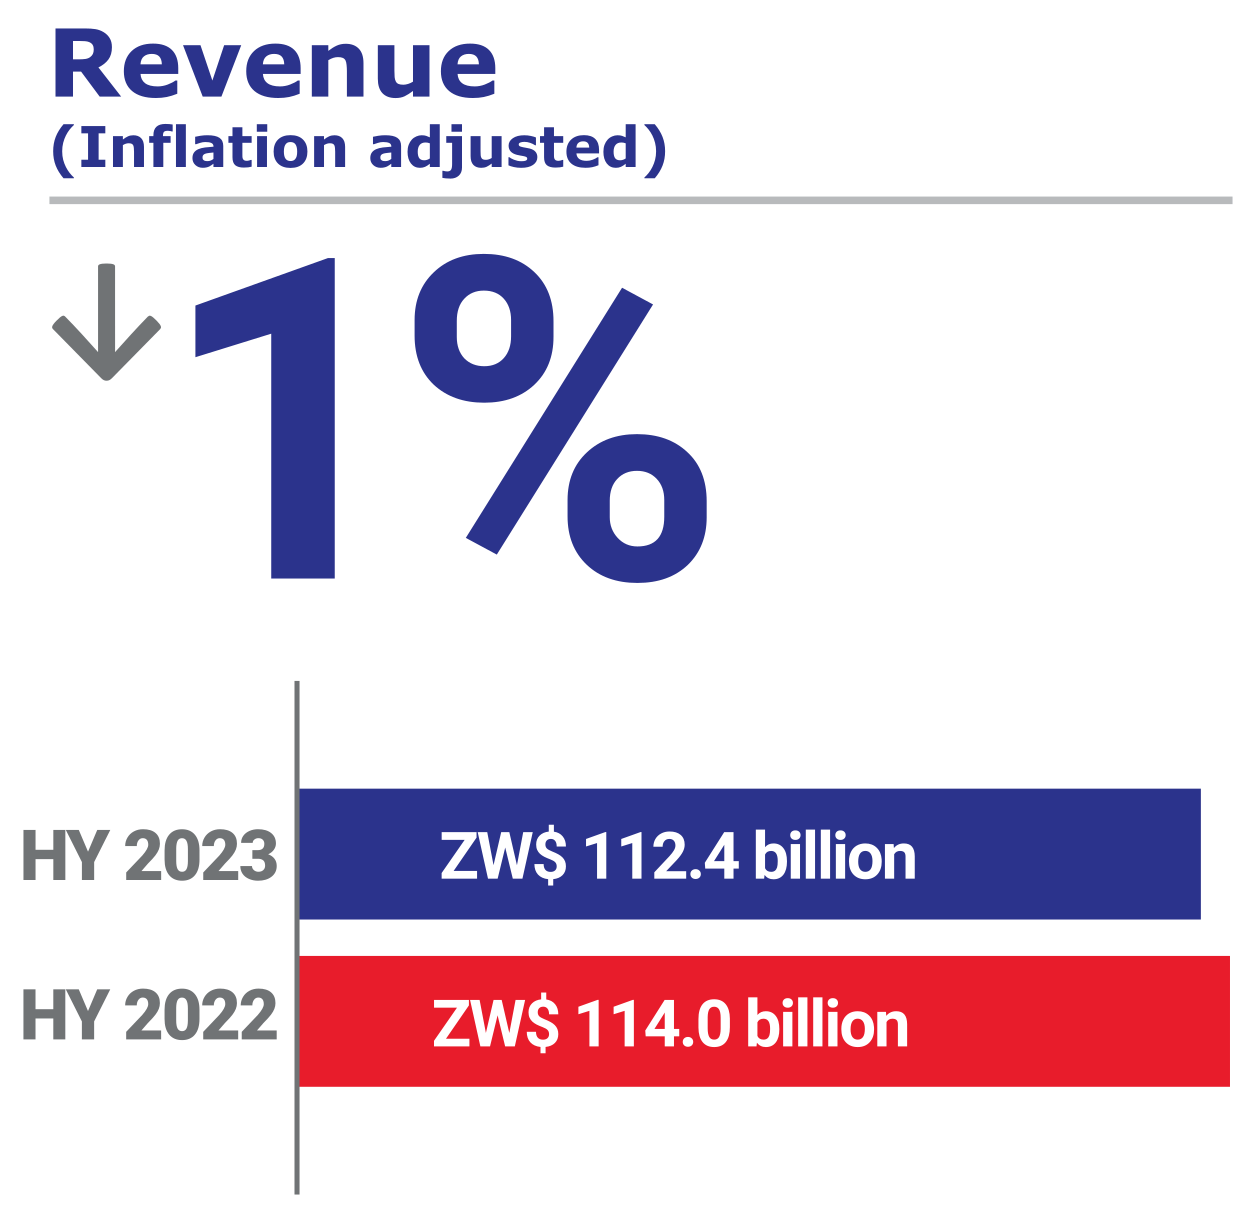 Econet HY2023: Revenue (Inflation adjusted): -1%